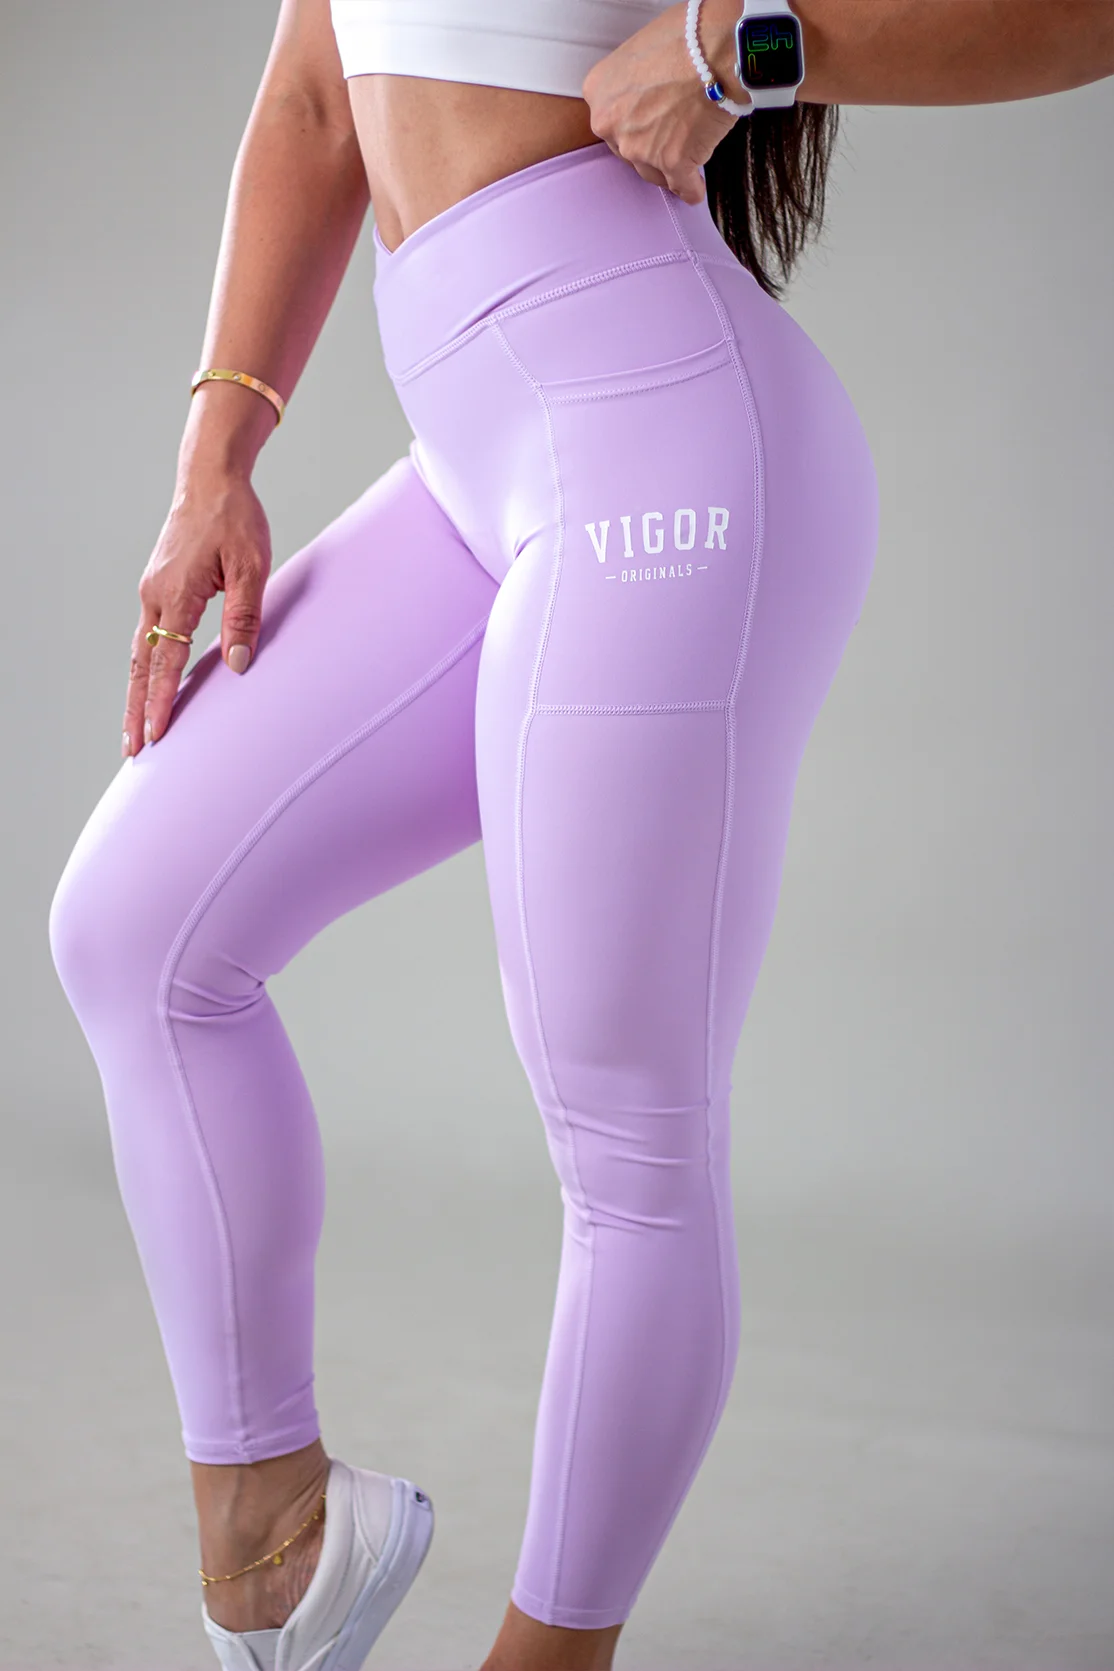 High waist v front leggings - vigororiginals